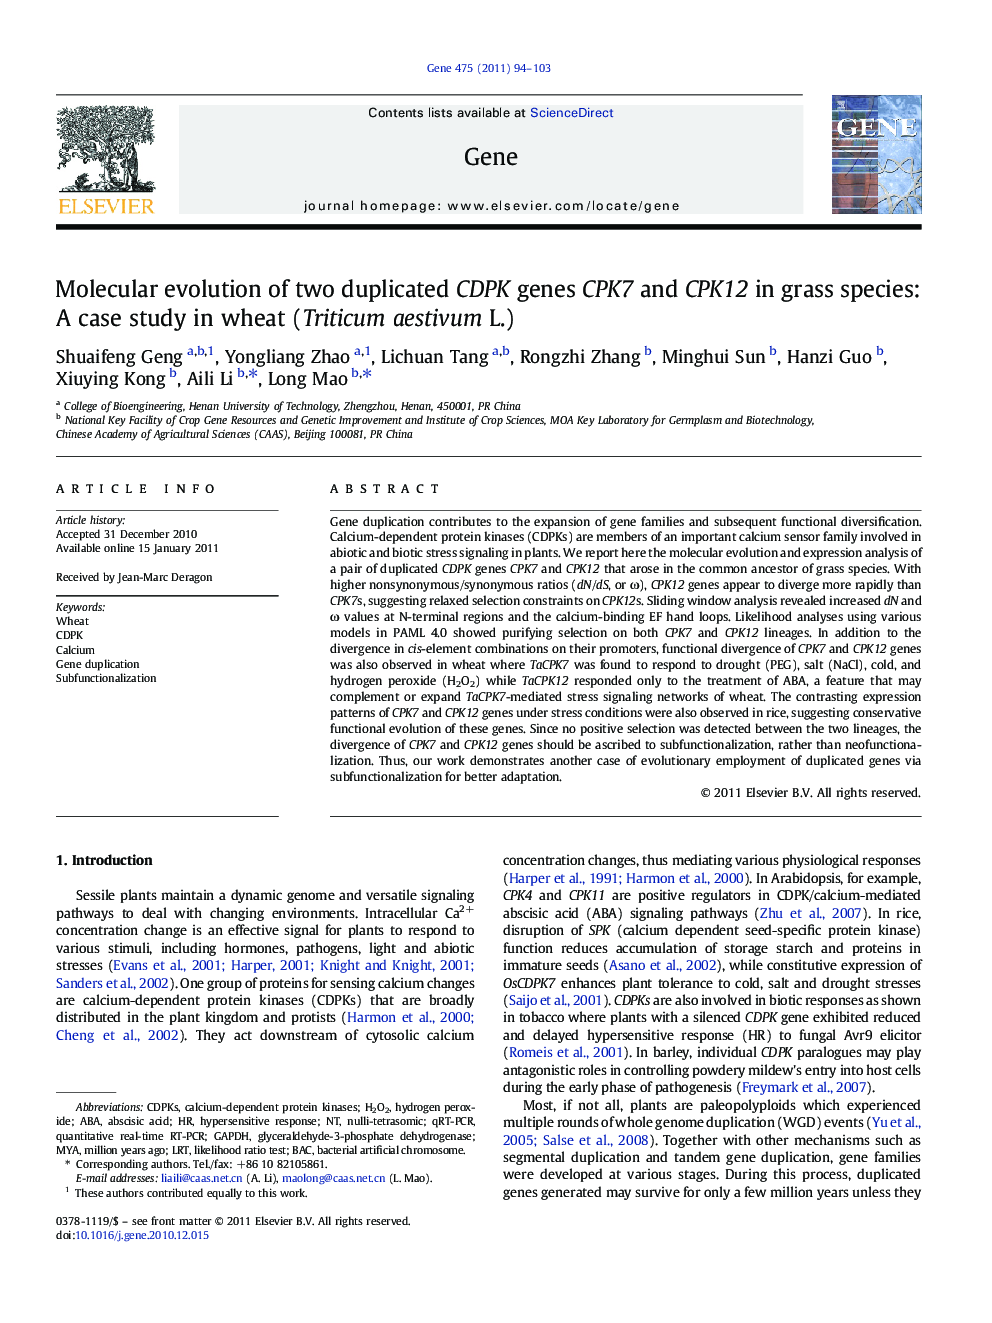 Molecular evolution of two duplicated CDPK genes CPK7 and CPK12 in grass species: A case study in wheat (Triticum aestivum L.)